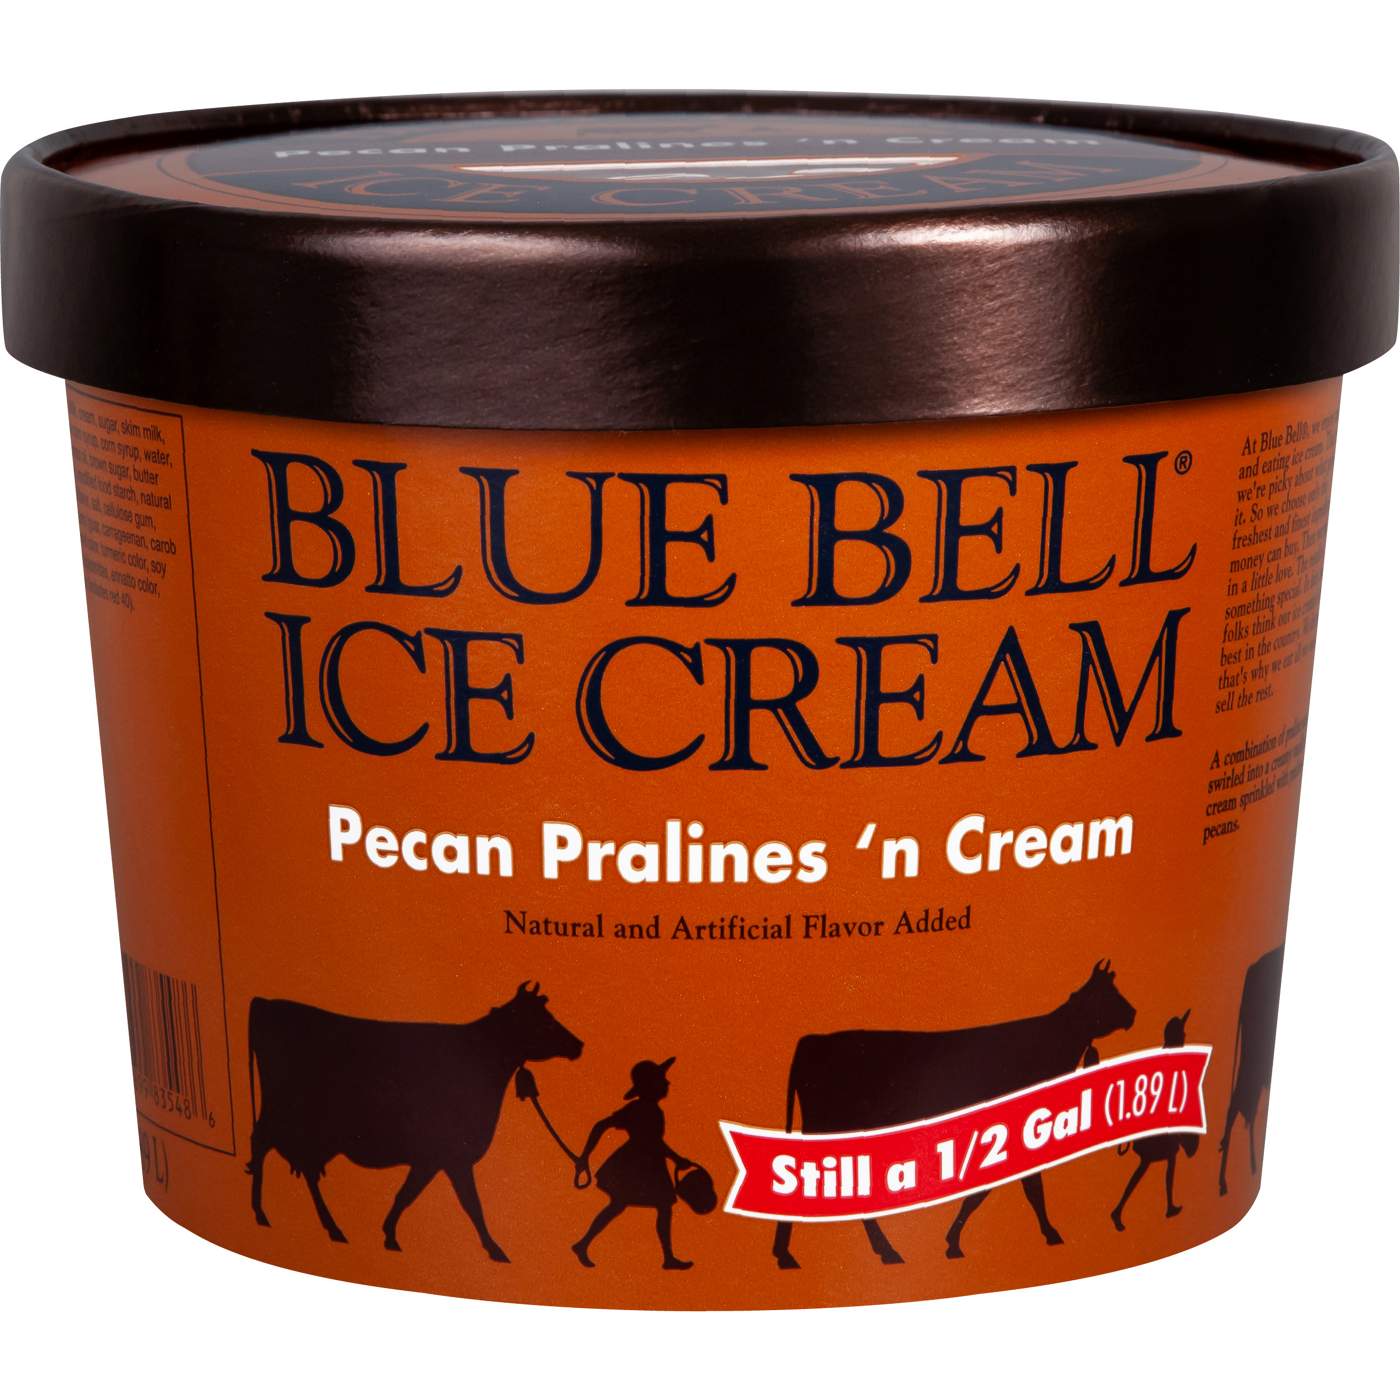 Blue Bell Pecan Pralines 'n Cream Ice Cream; image 1 of 2